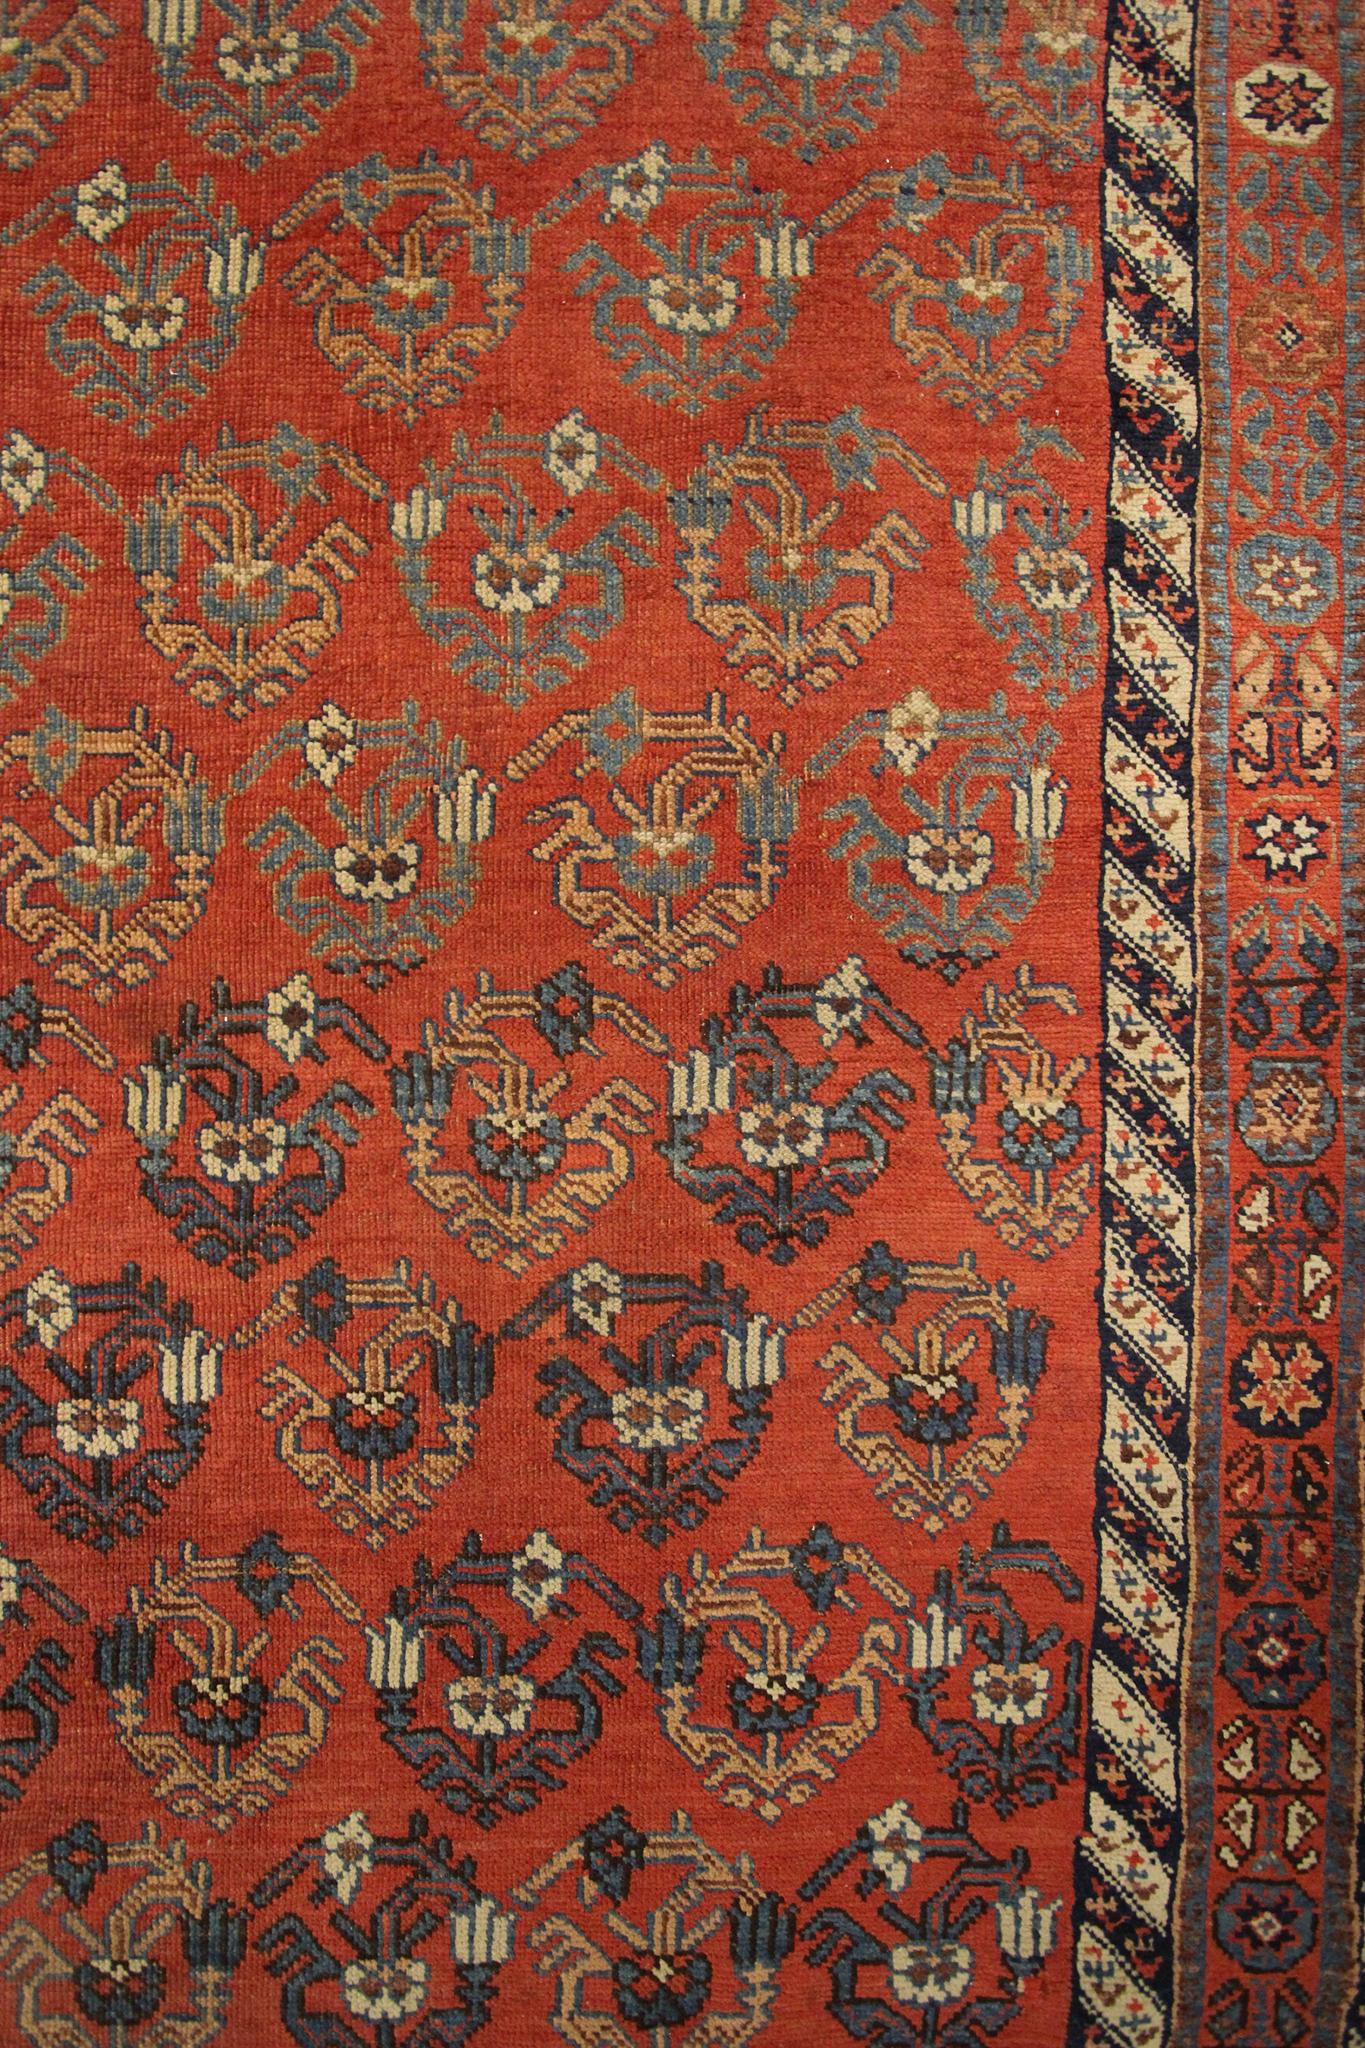 Late 19th Century 1880 Antique Afshar Rug Persian Rug Geometric Wool Foundation 7x12 206cmx376cm For Sale